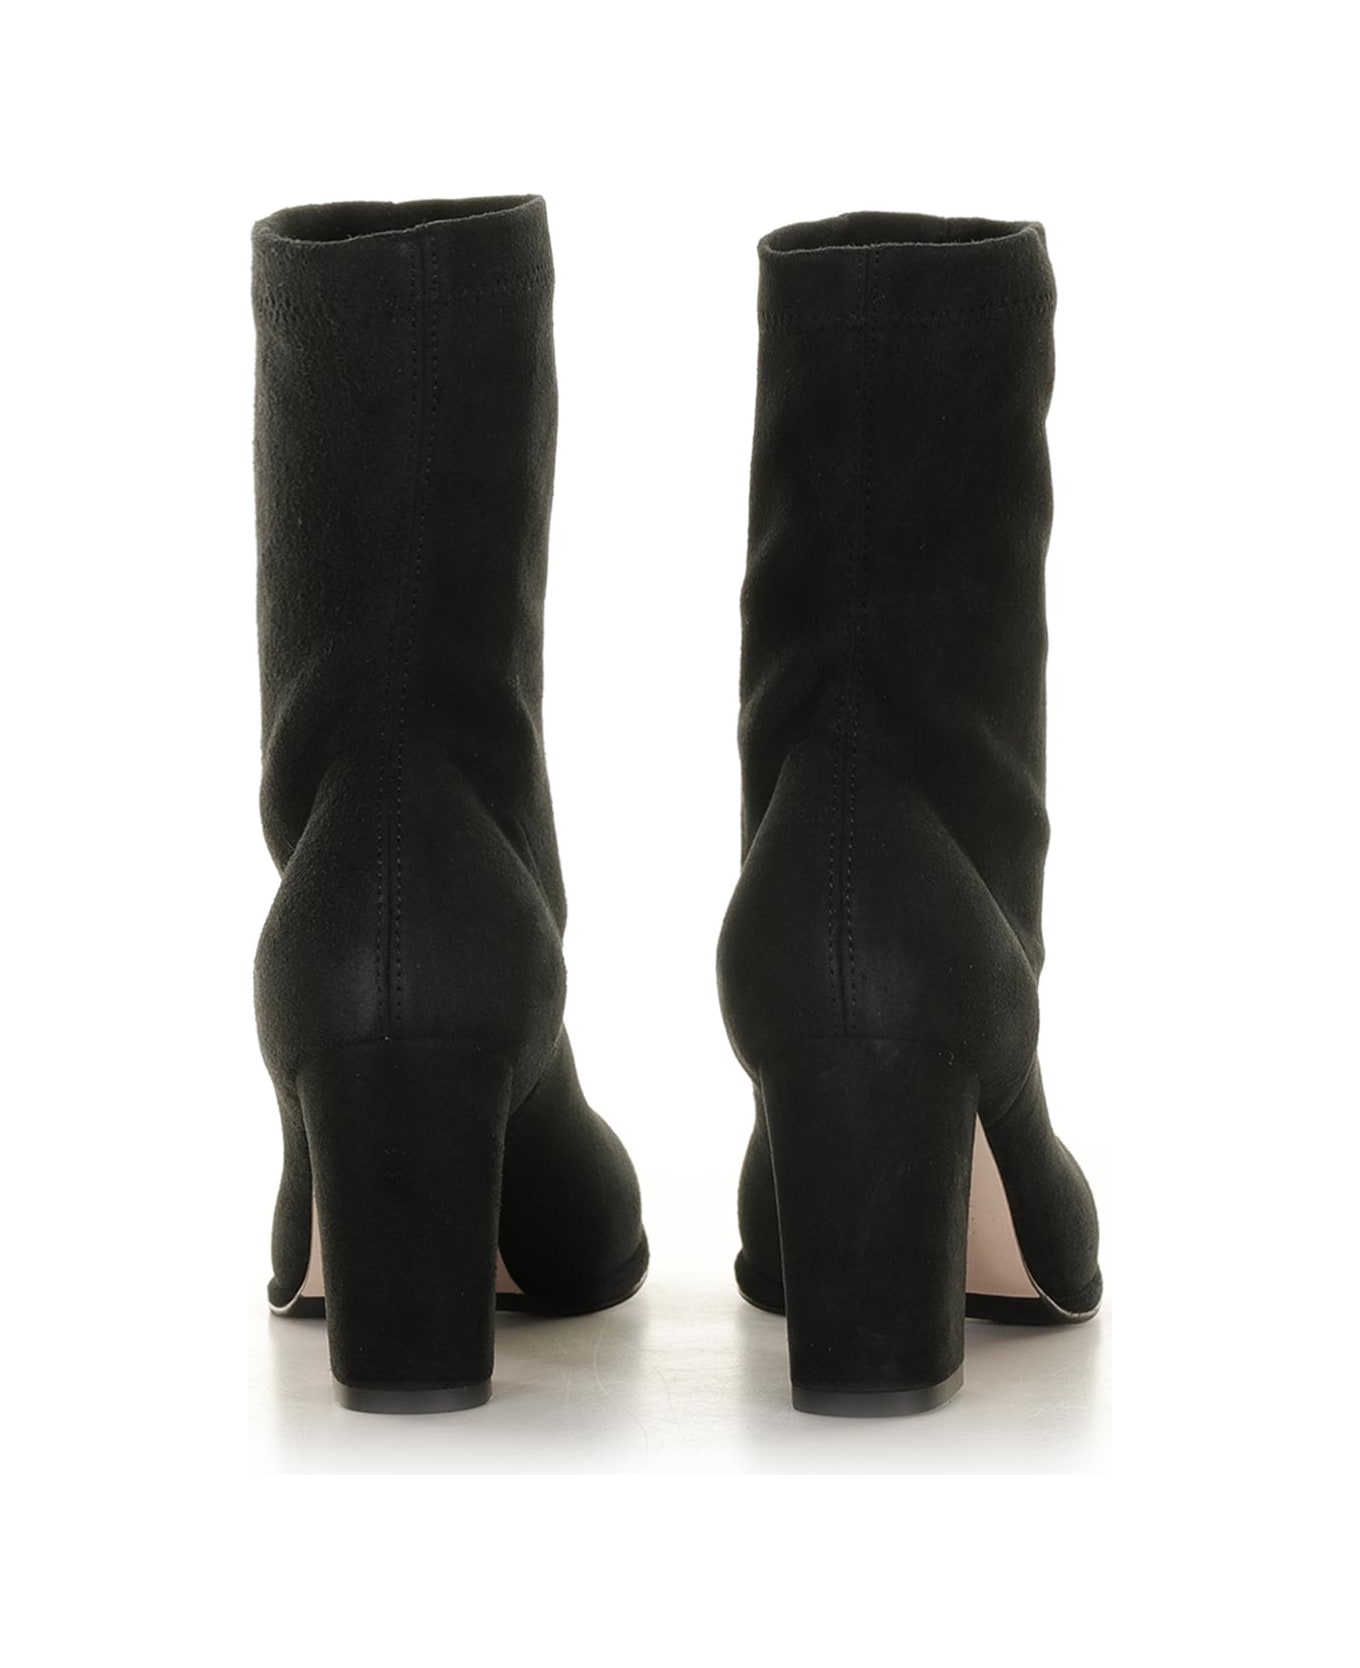 Le Silla Elsa Ankle Boot In Black Suede - NERO